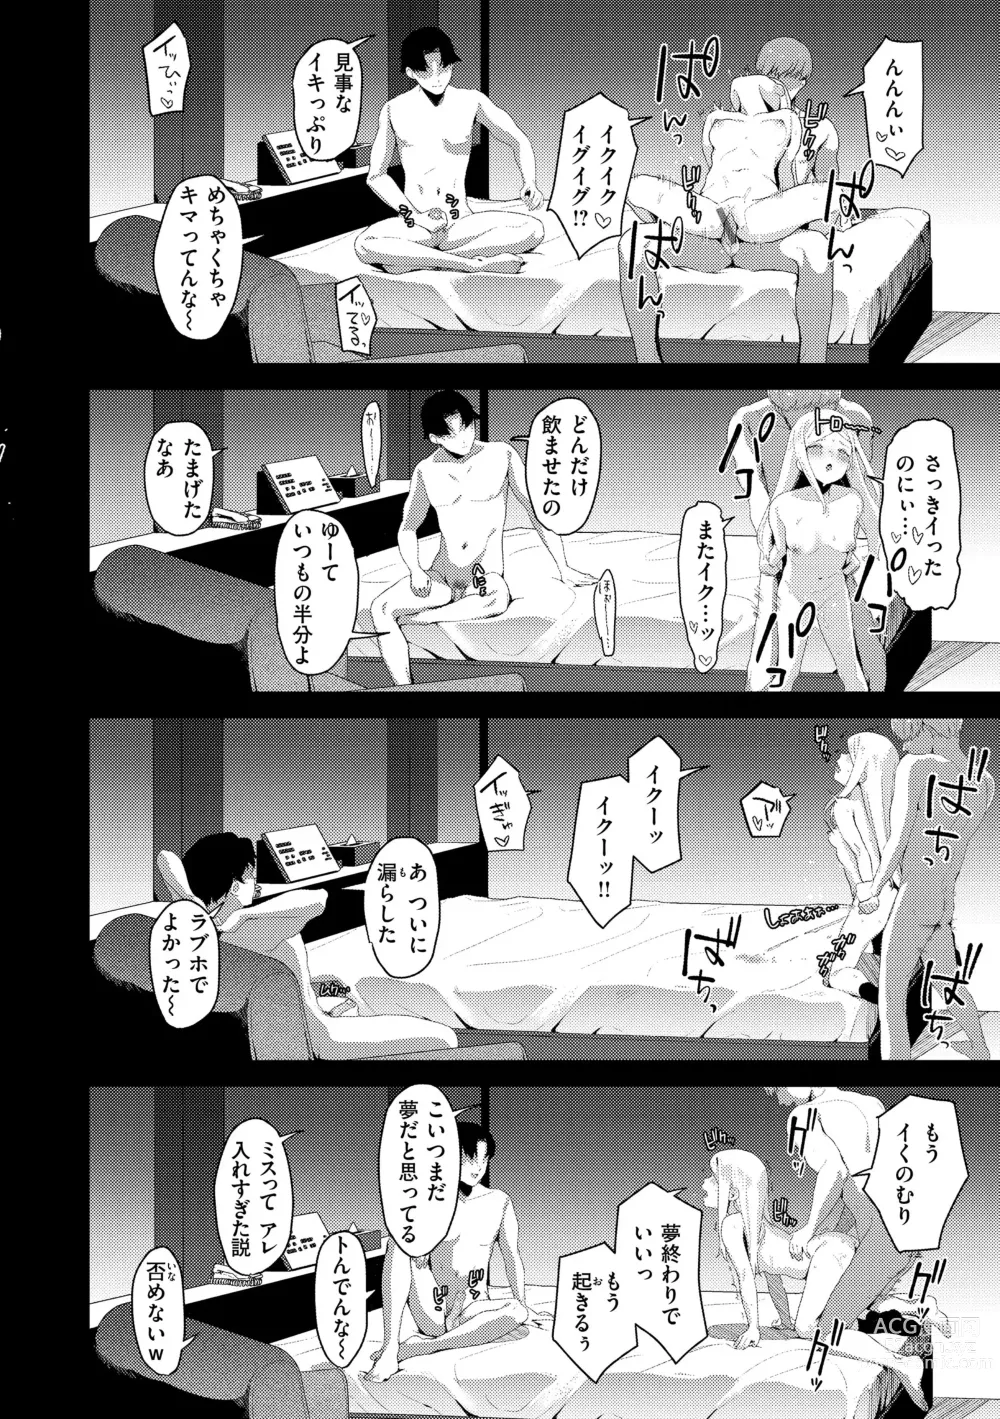 Page 152 of manga Wakarasete. - Show me reality.